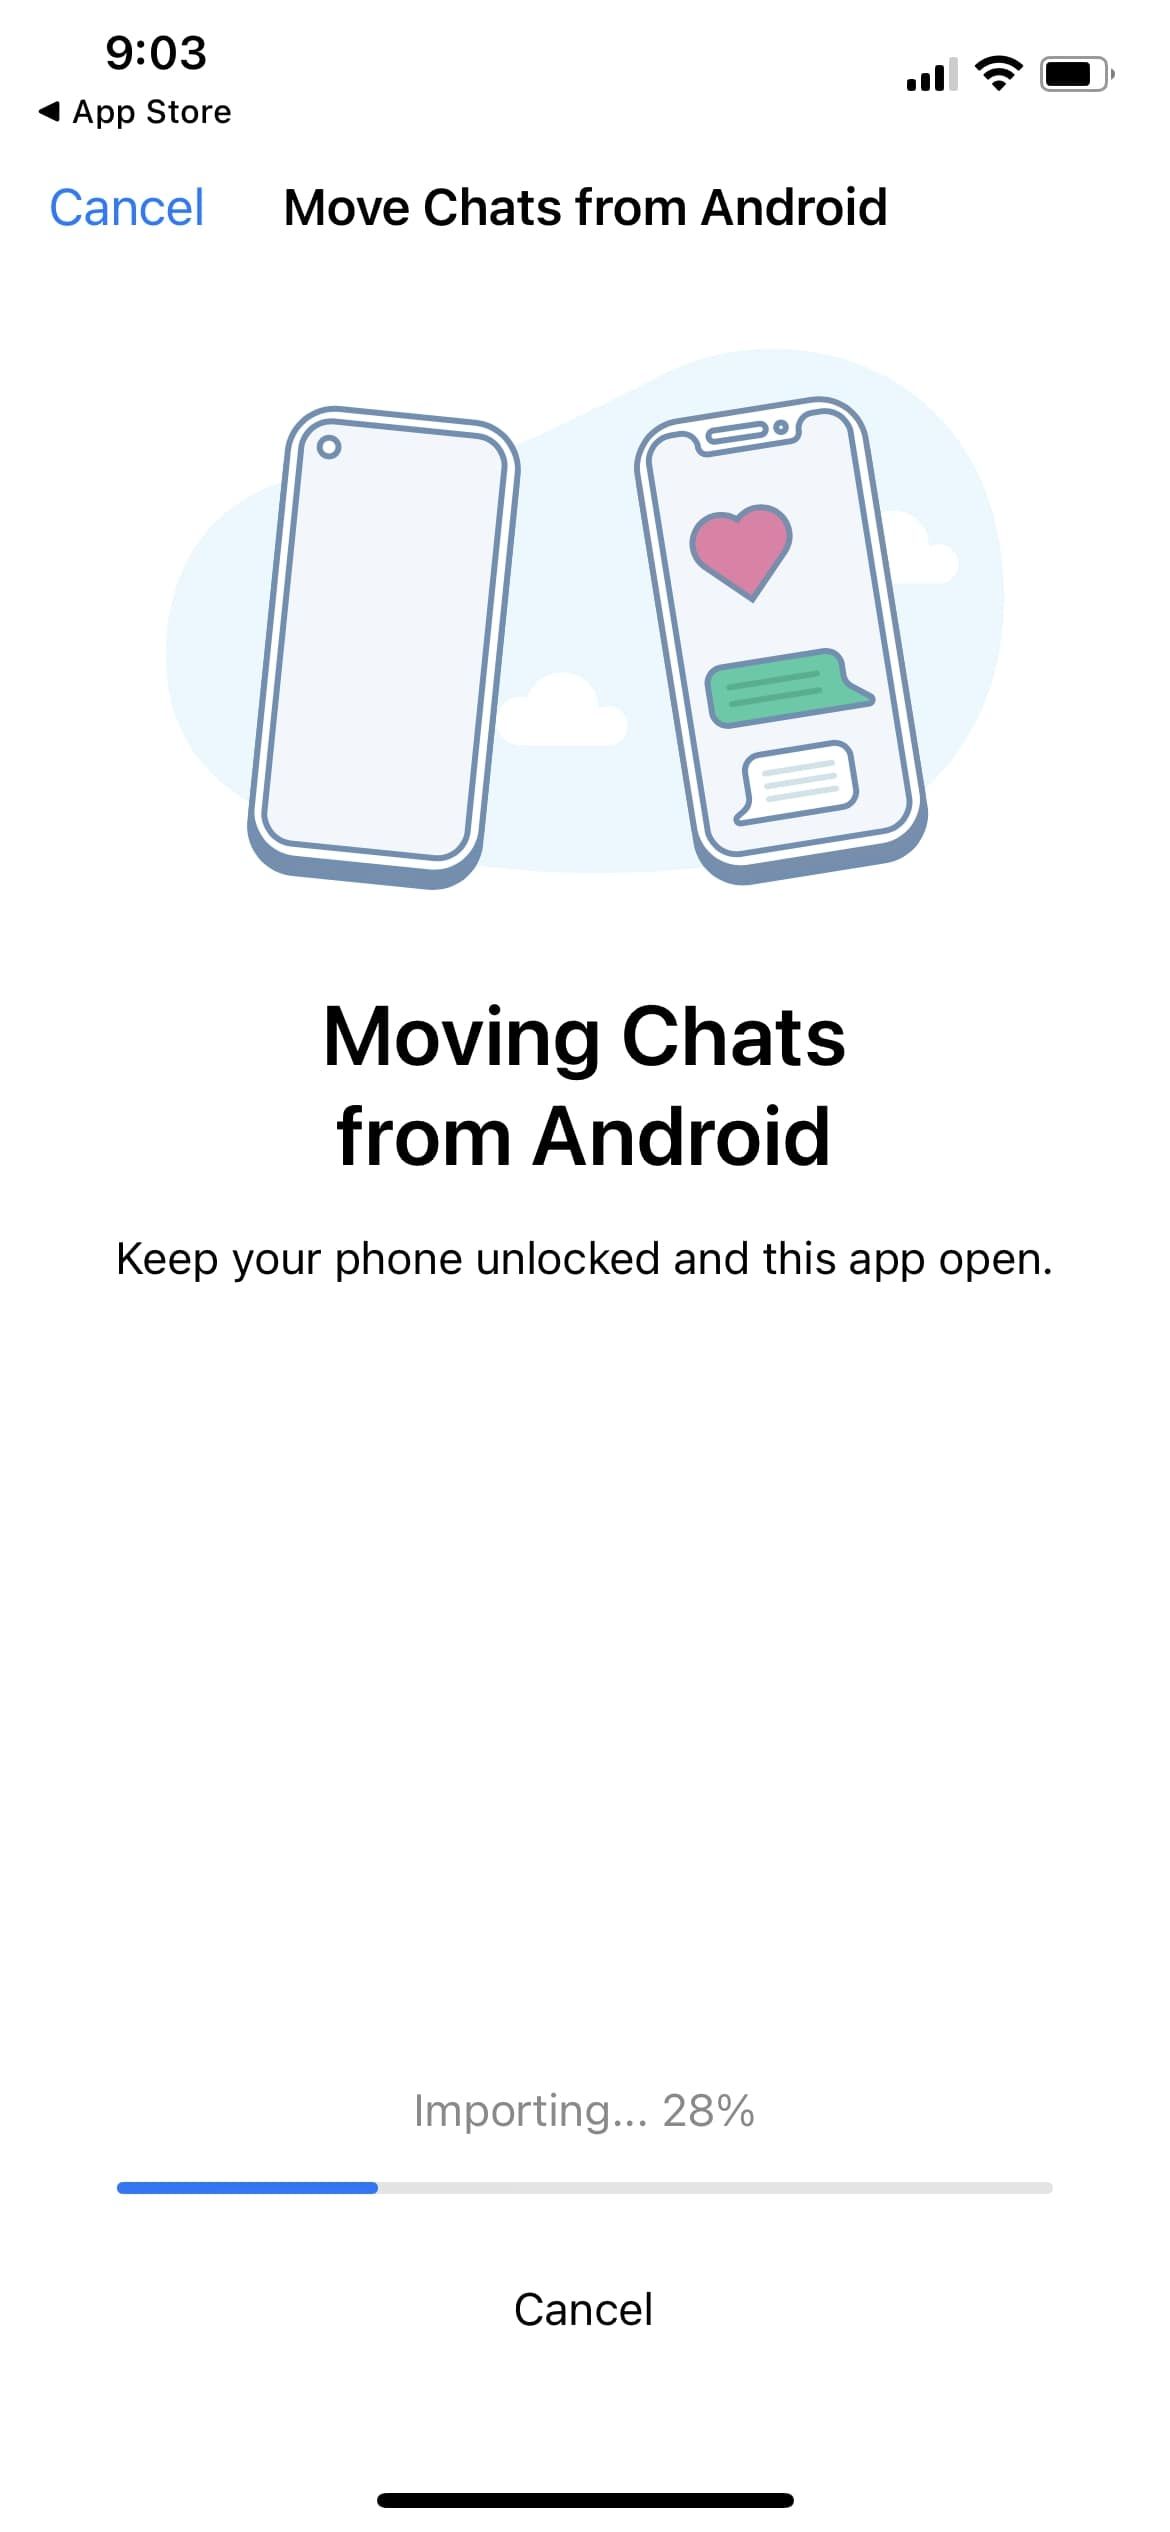 moveing chats progress screen on whatsapp iphone app